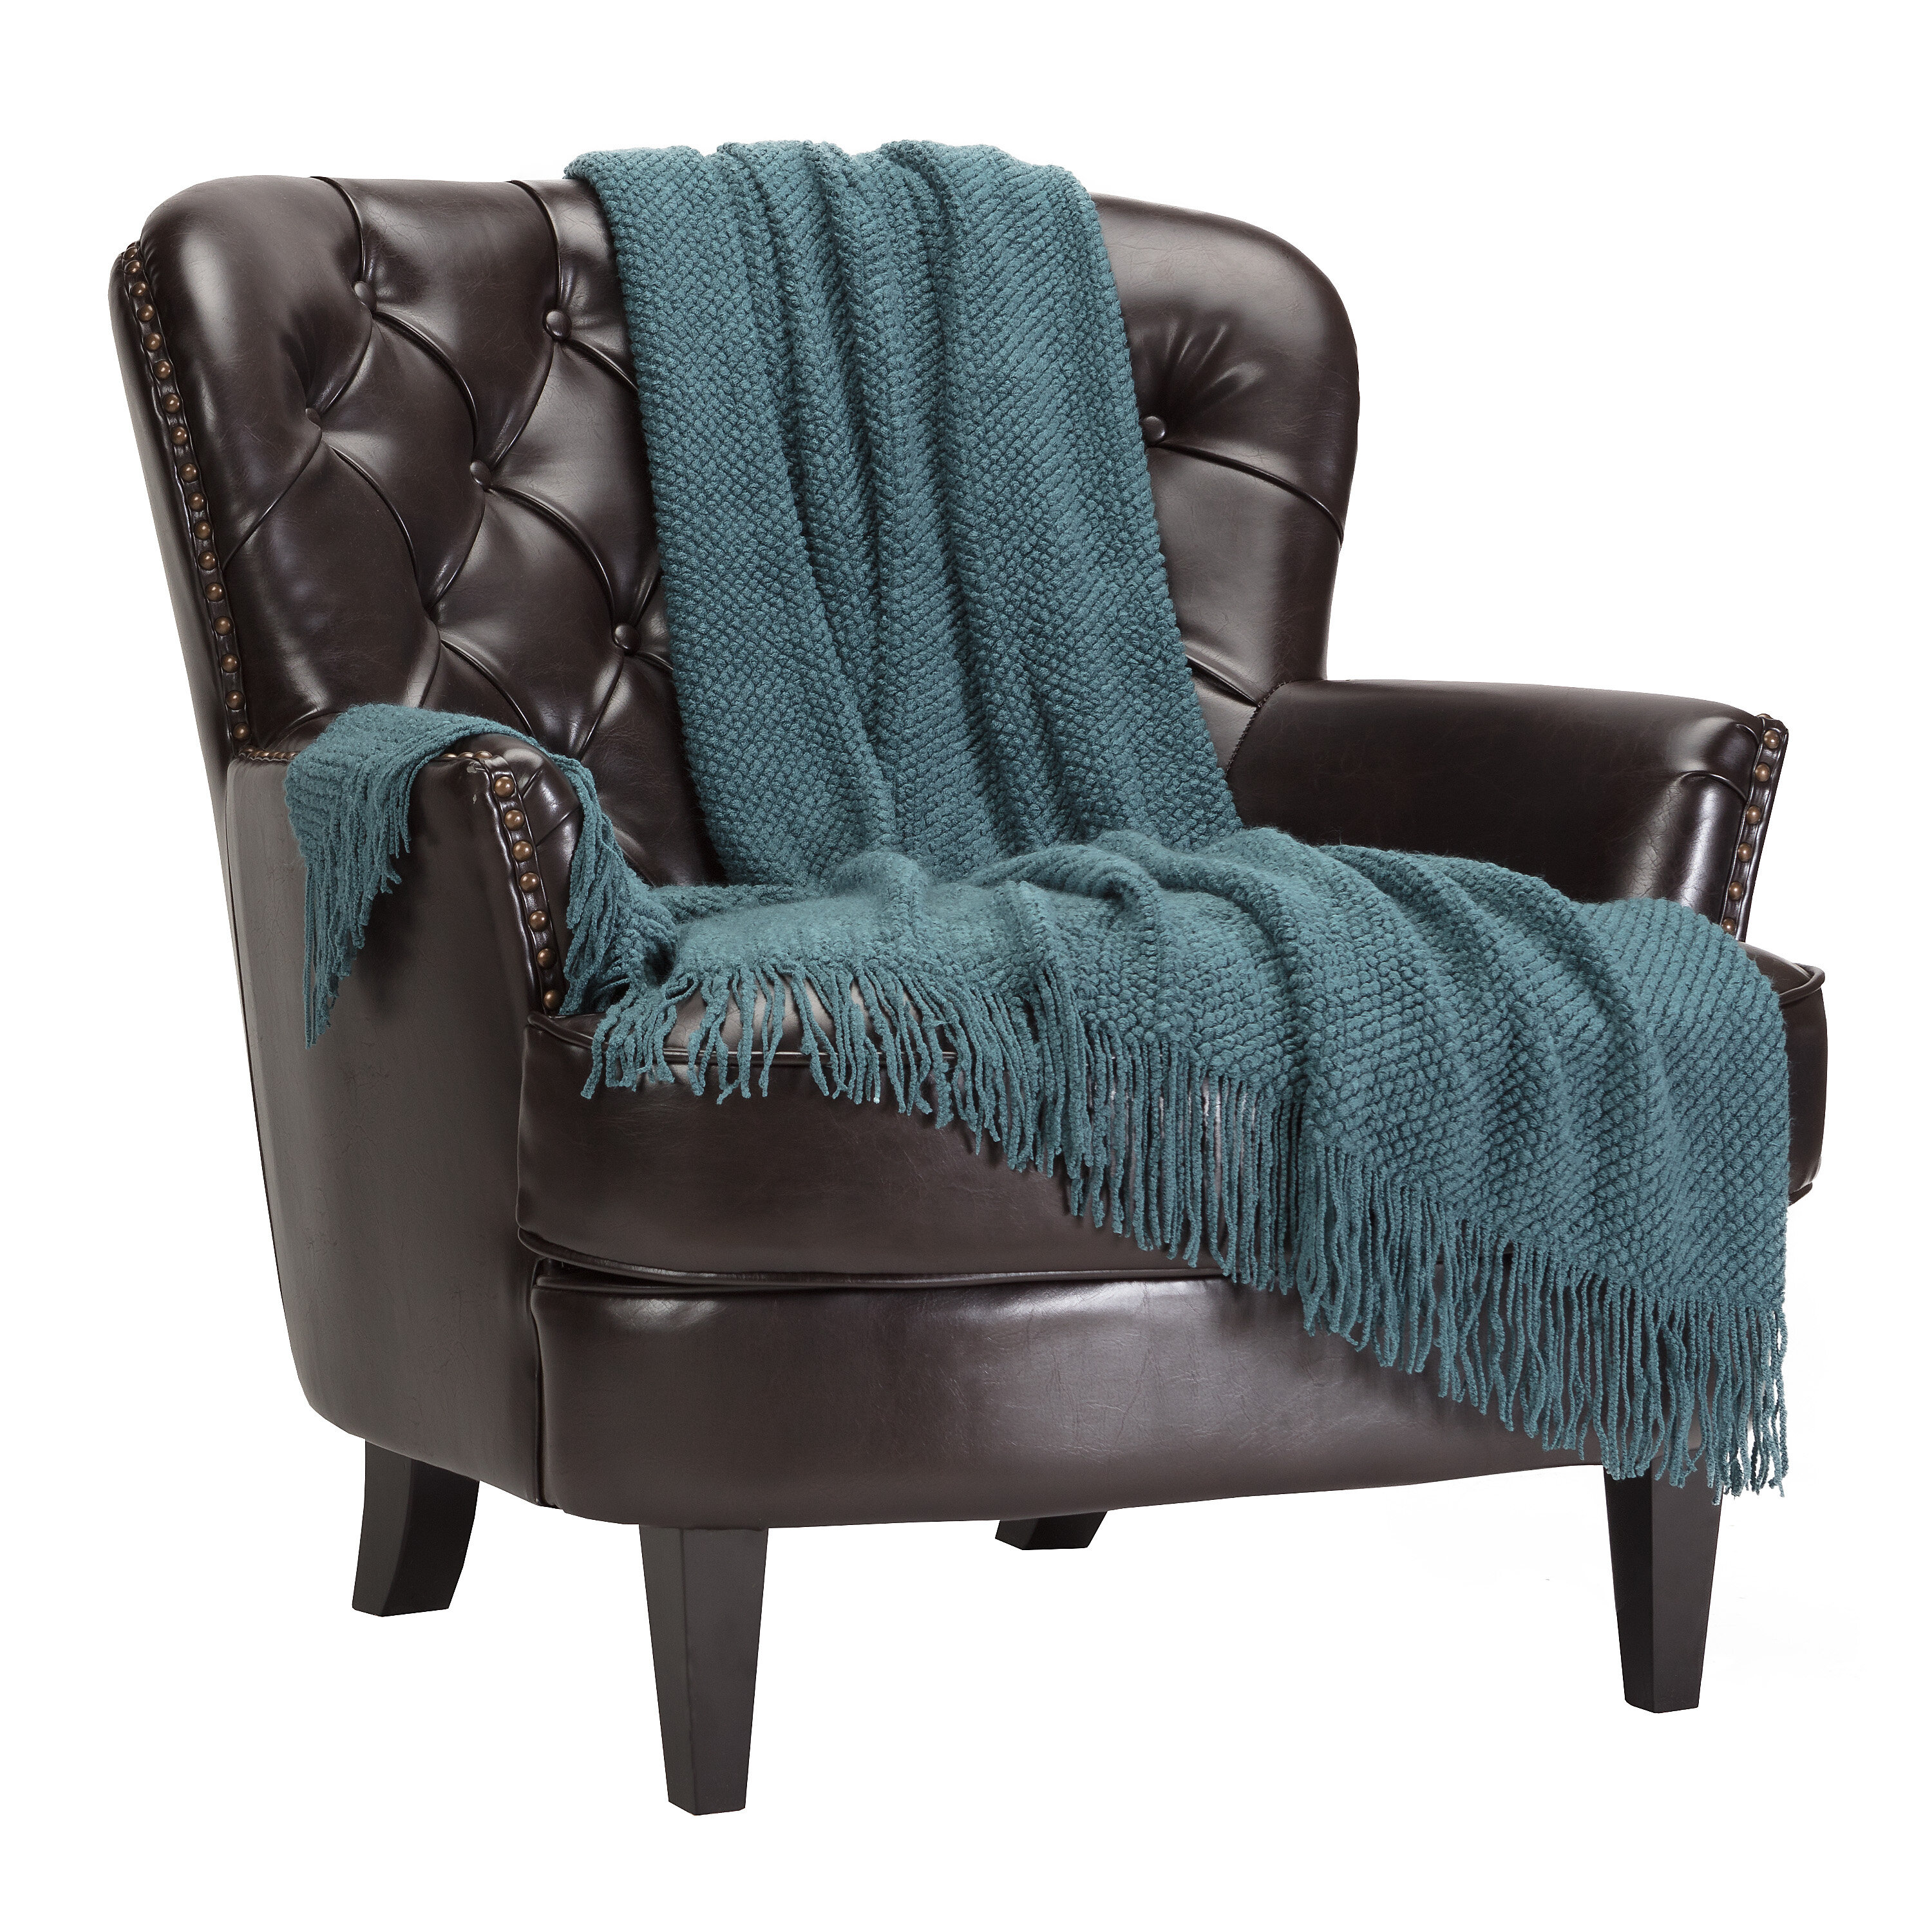 Light Blue Soft Couch Sofa Travel Warm Cozy Nap Chenille Child Knit Throw Blanket Sue/&Joe Kids Throw Blanket 32x 41